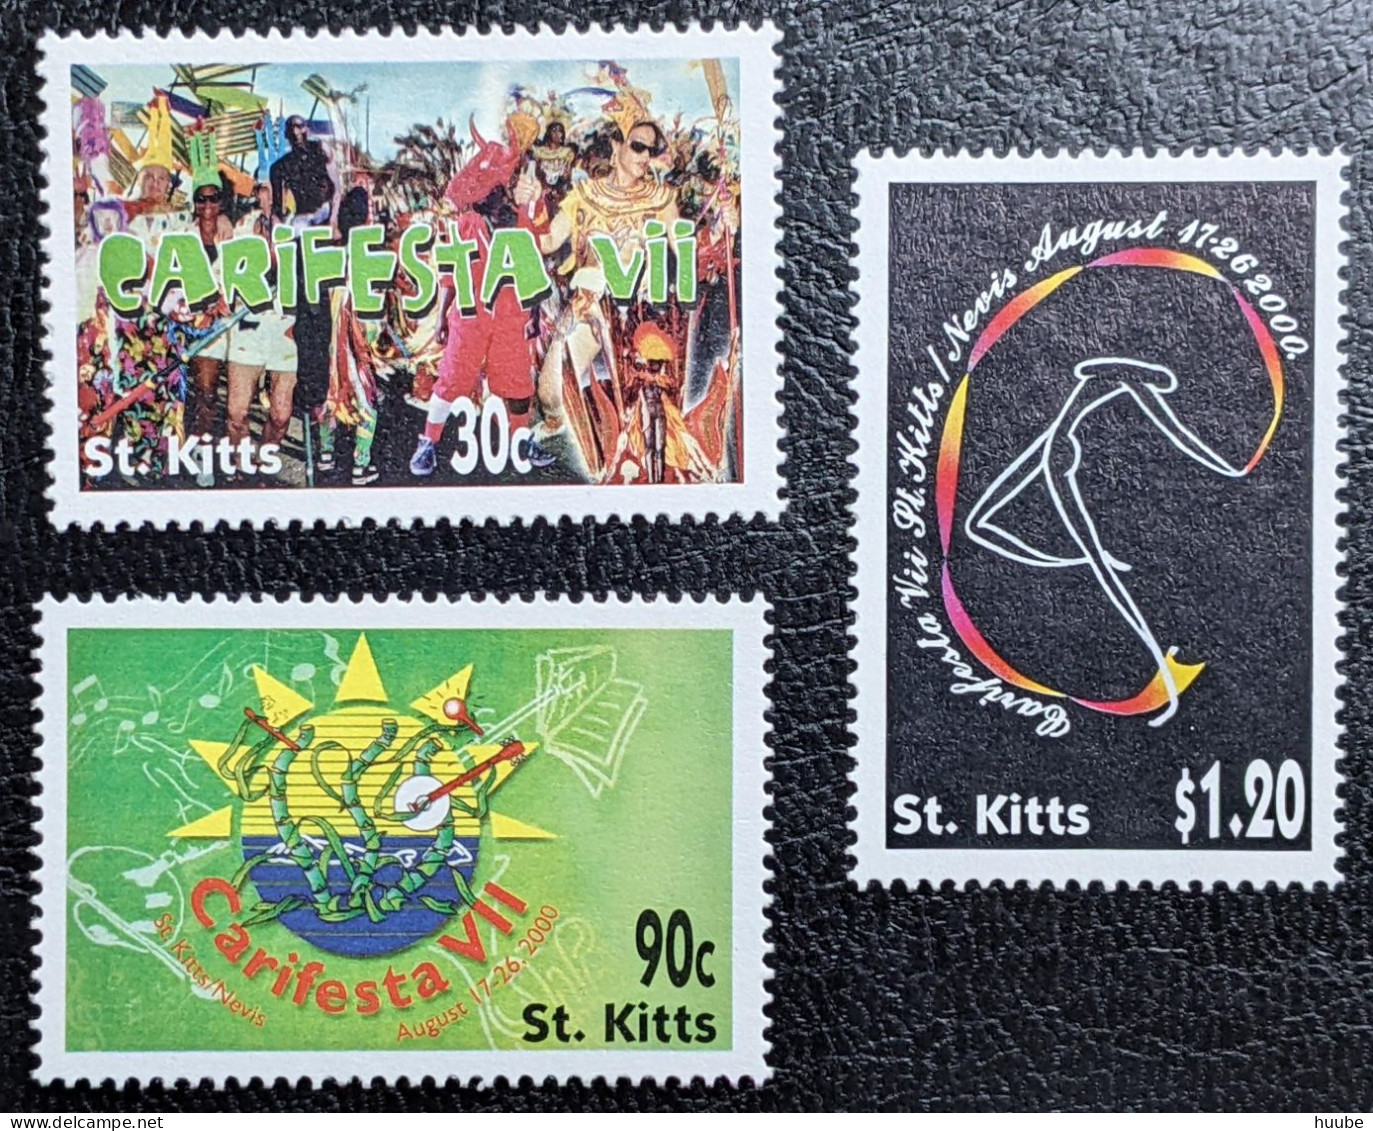 St. Kitts, 2000, Mi 516-518, "Carifesta VII" Arts Festival, Festival Participants, Emblem, Dancer, 3v, MNH - Danse